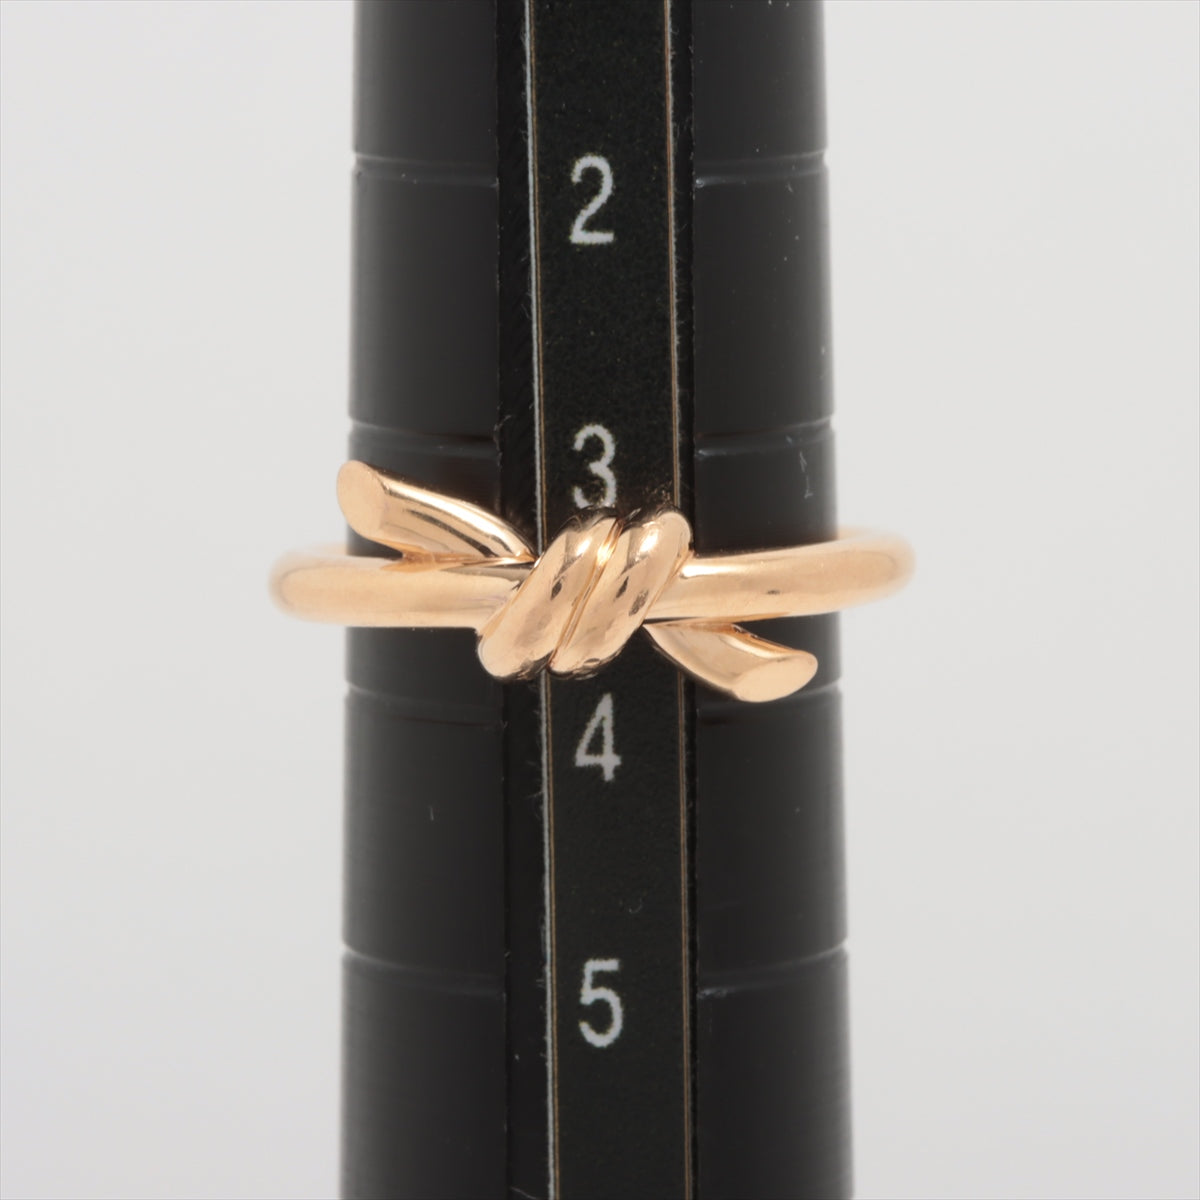 Tiffany Knot Ring 750(PG) 3.2g